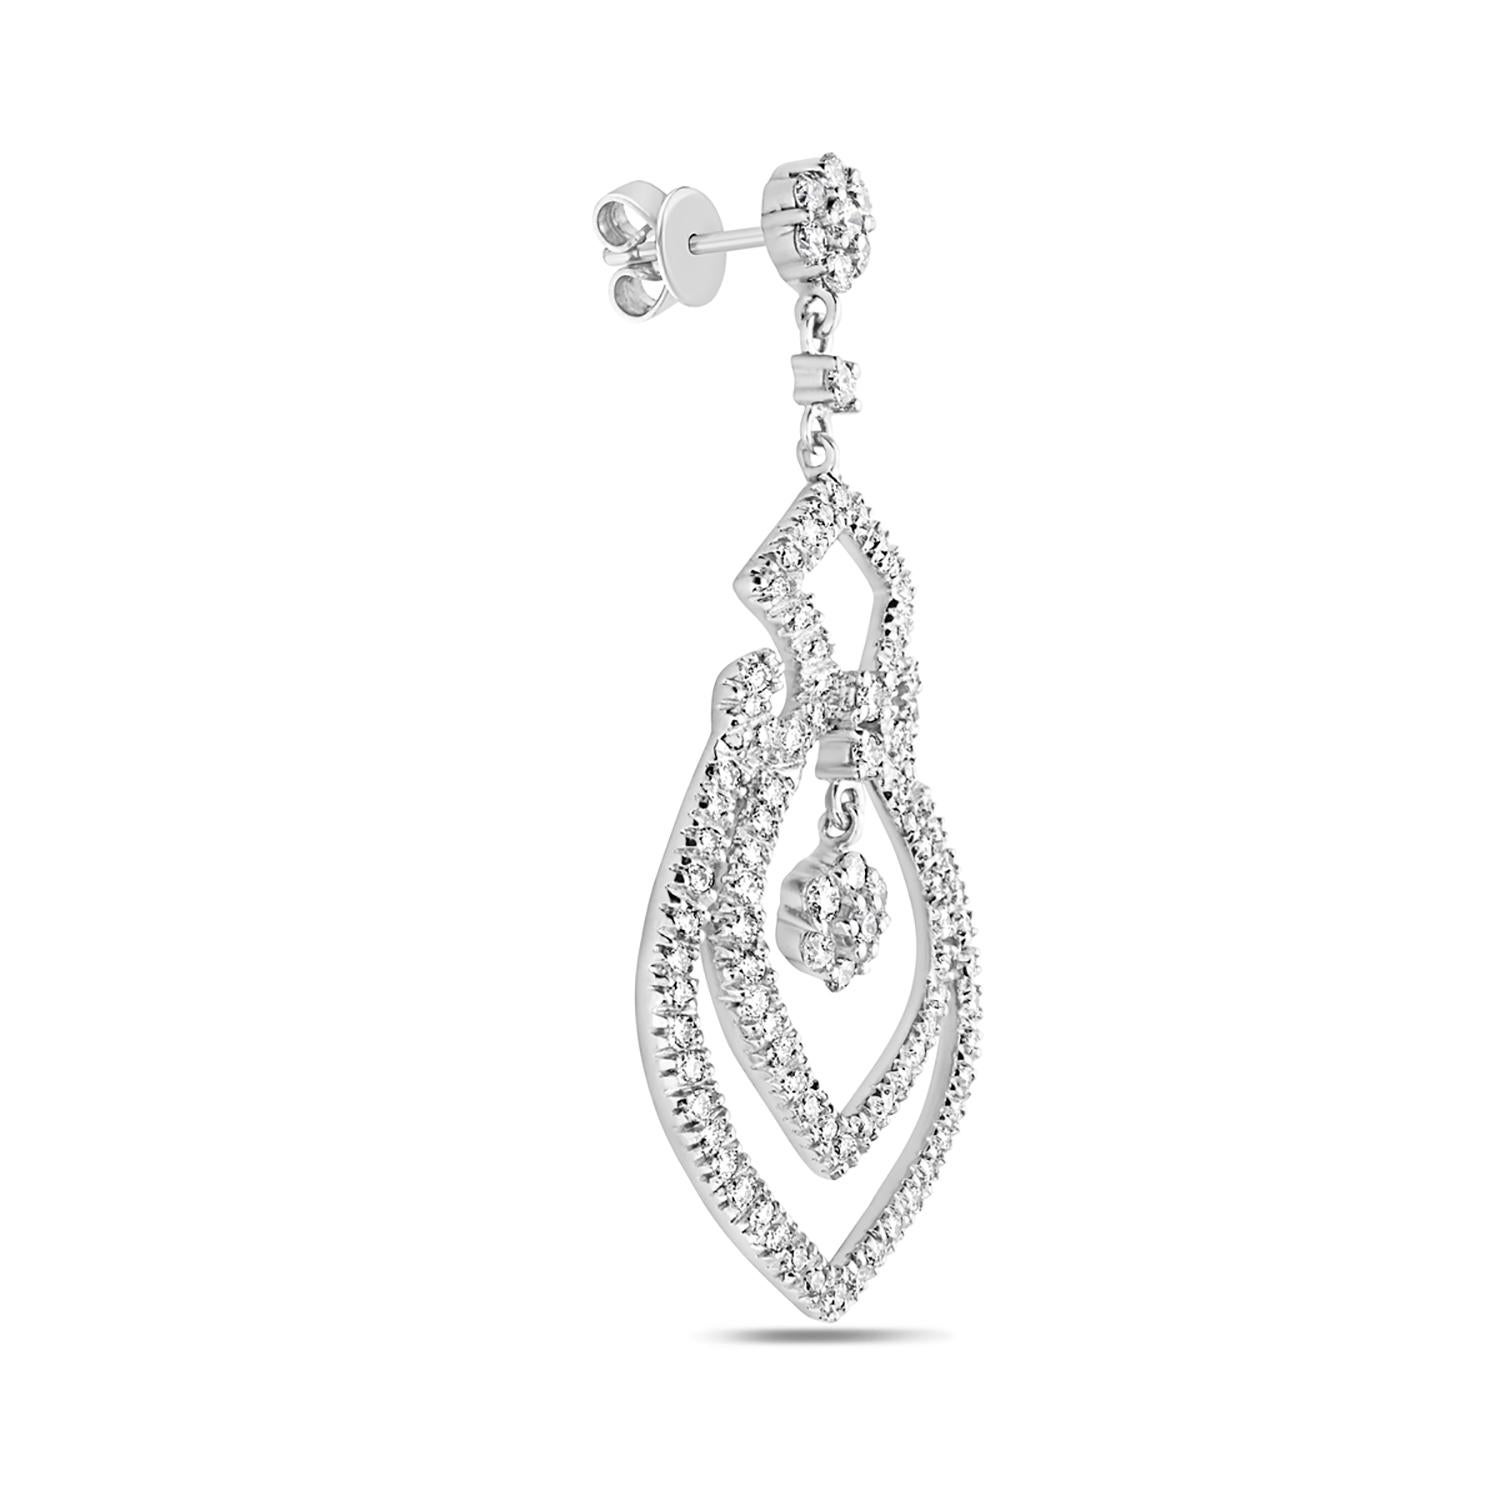 Artisan High Quality VS Diamonds Dangle Earrings Made in 18k White Gold For Sale